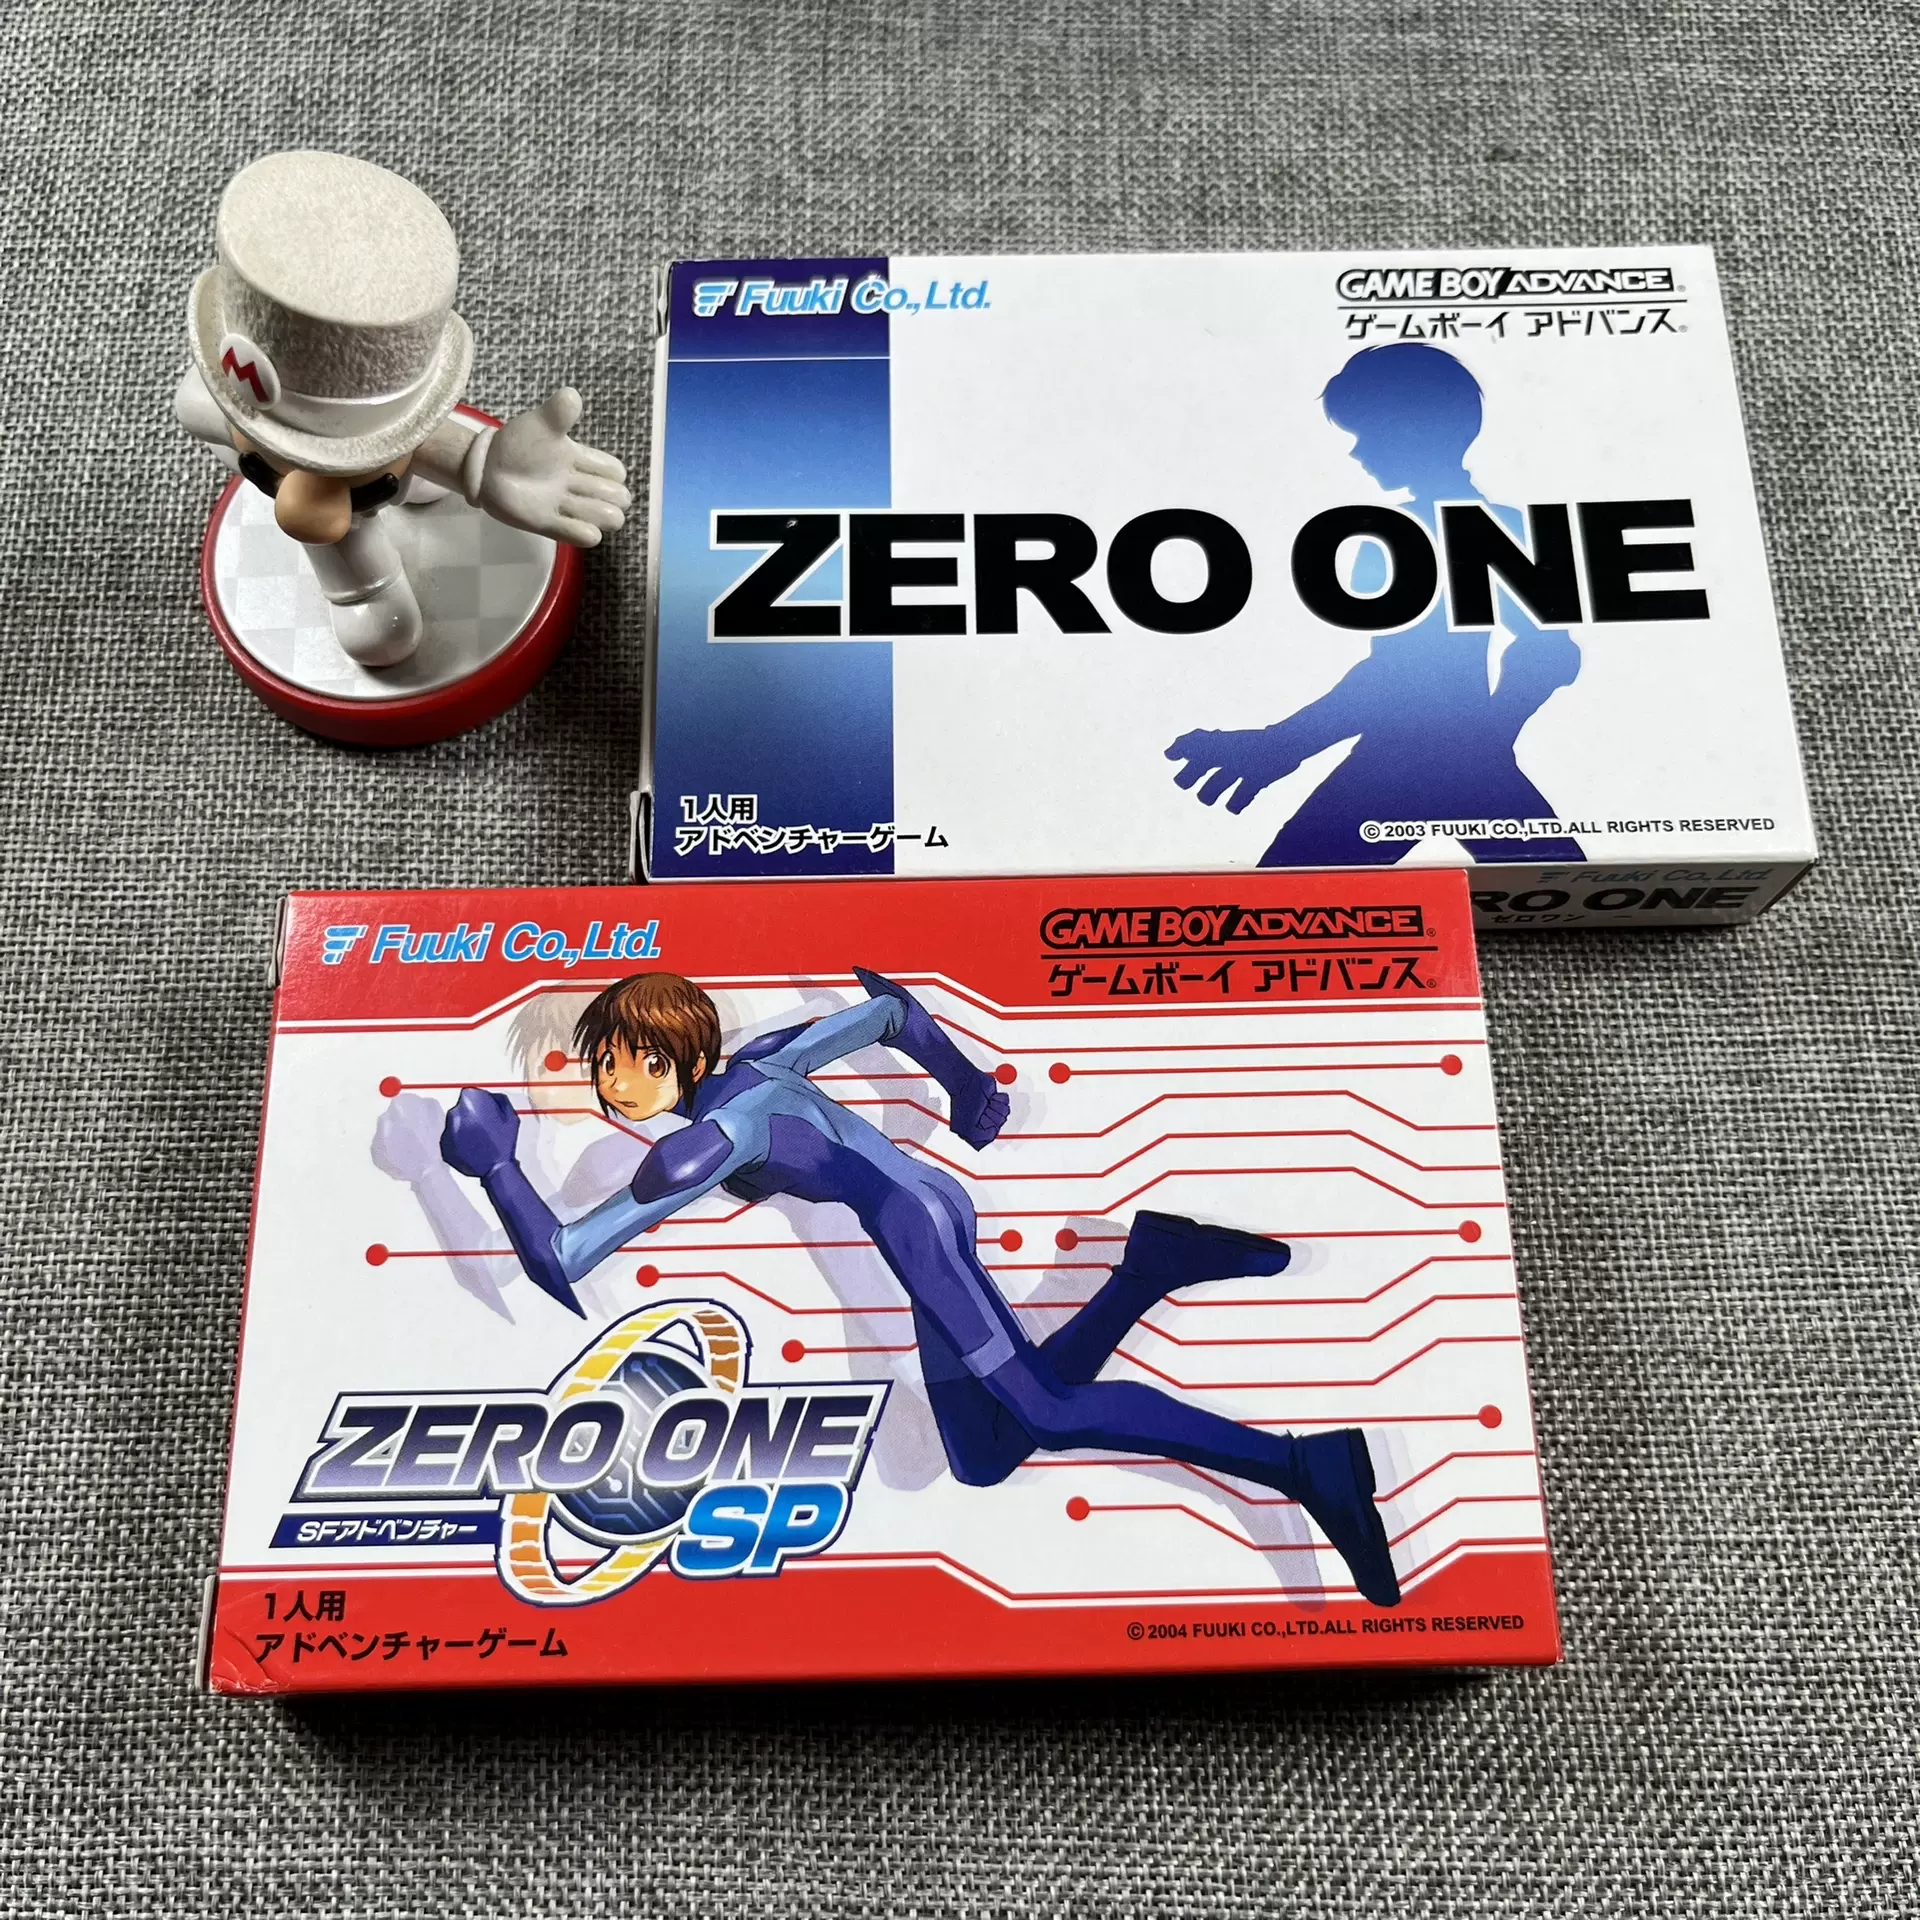 ZERO ONE SP ゲームボーイアドバンス GBA-